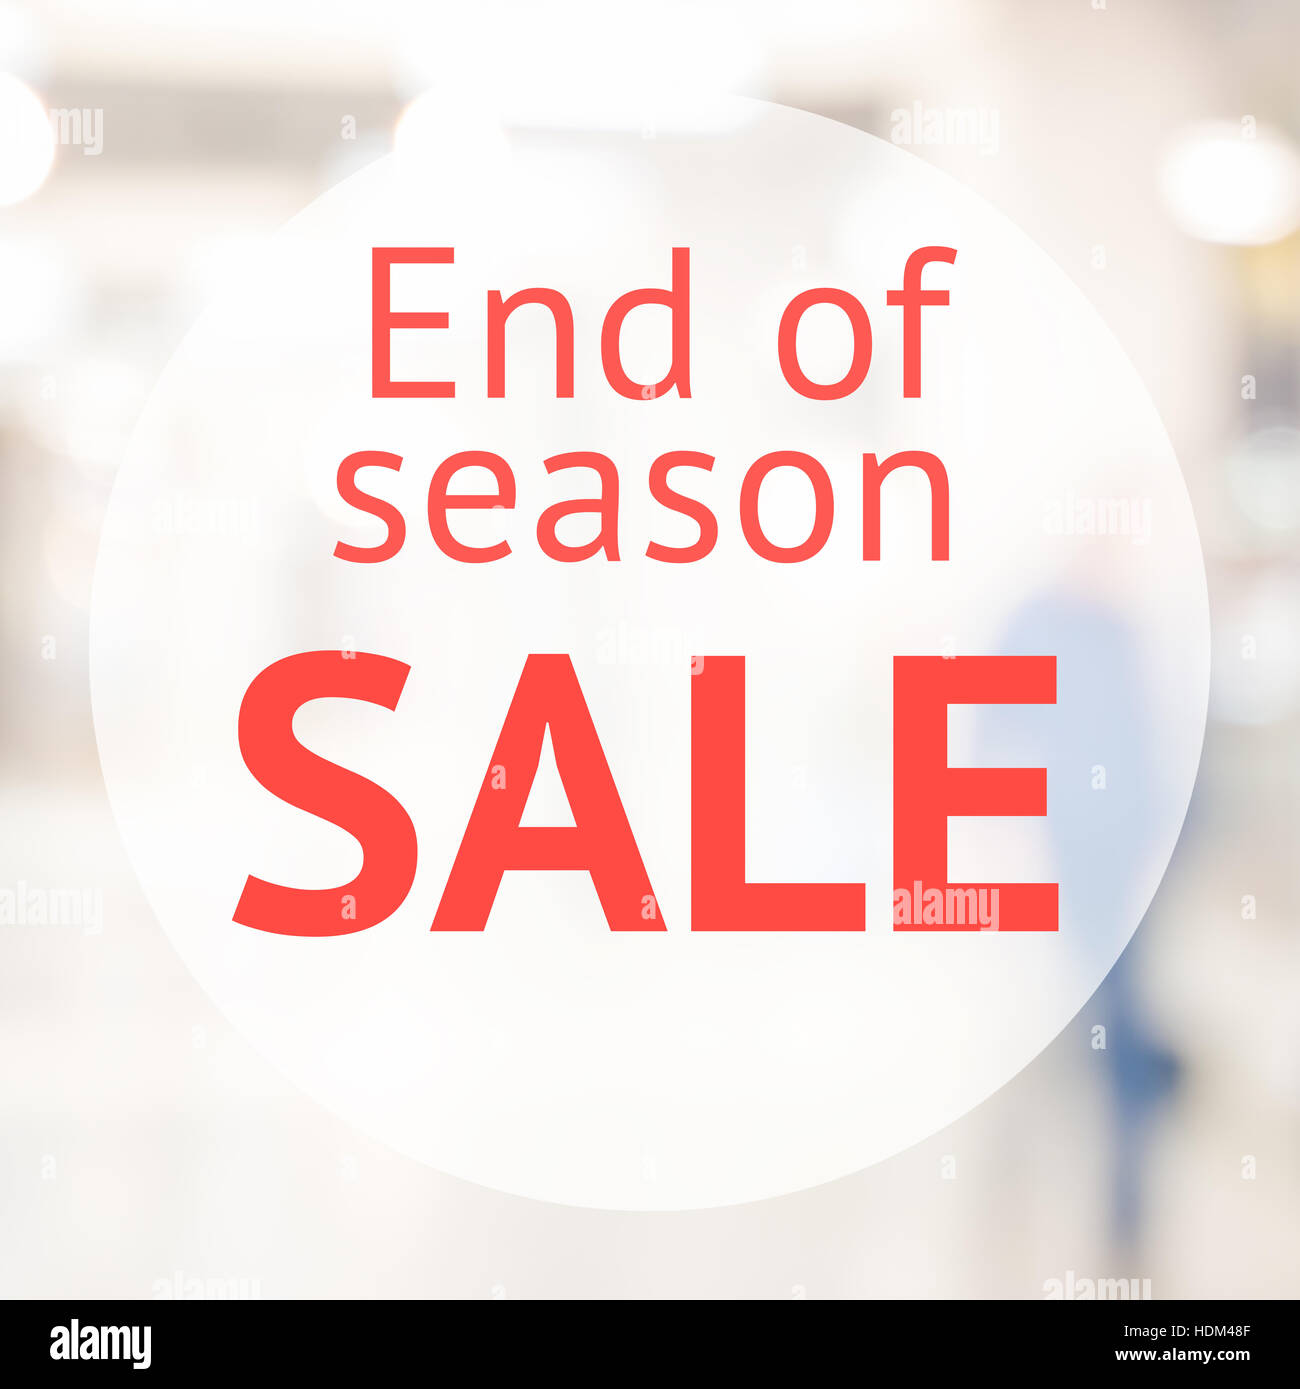 End of season sale sign Stock Photo - Alamy